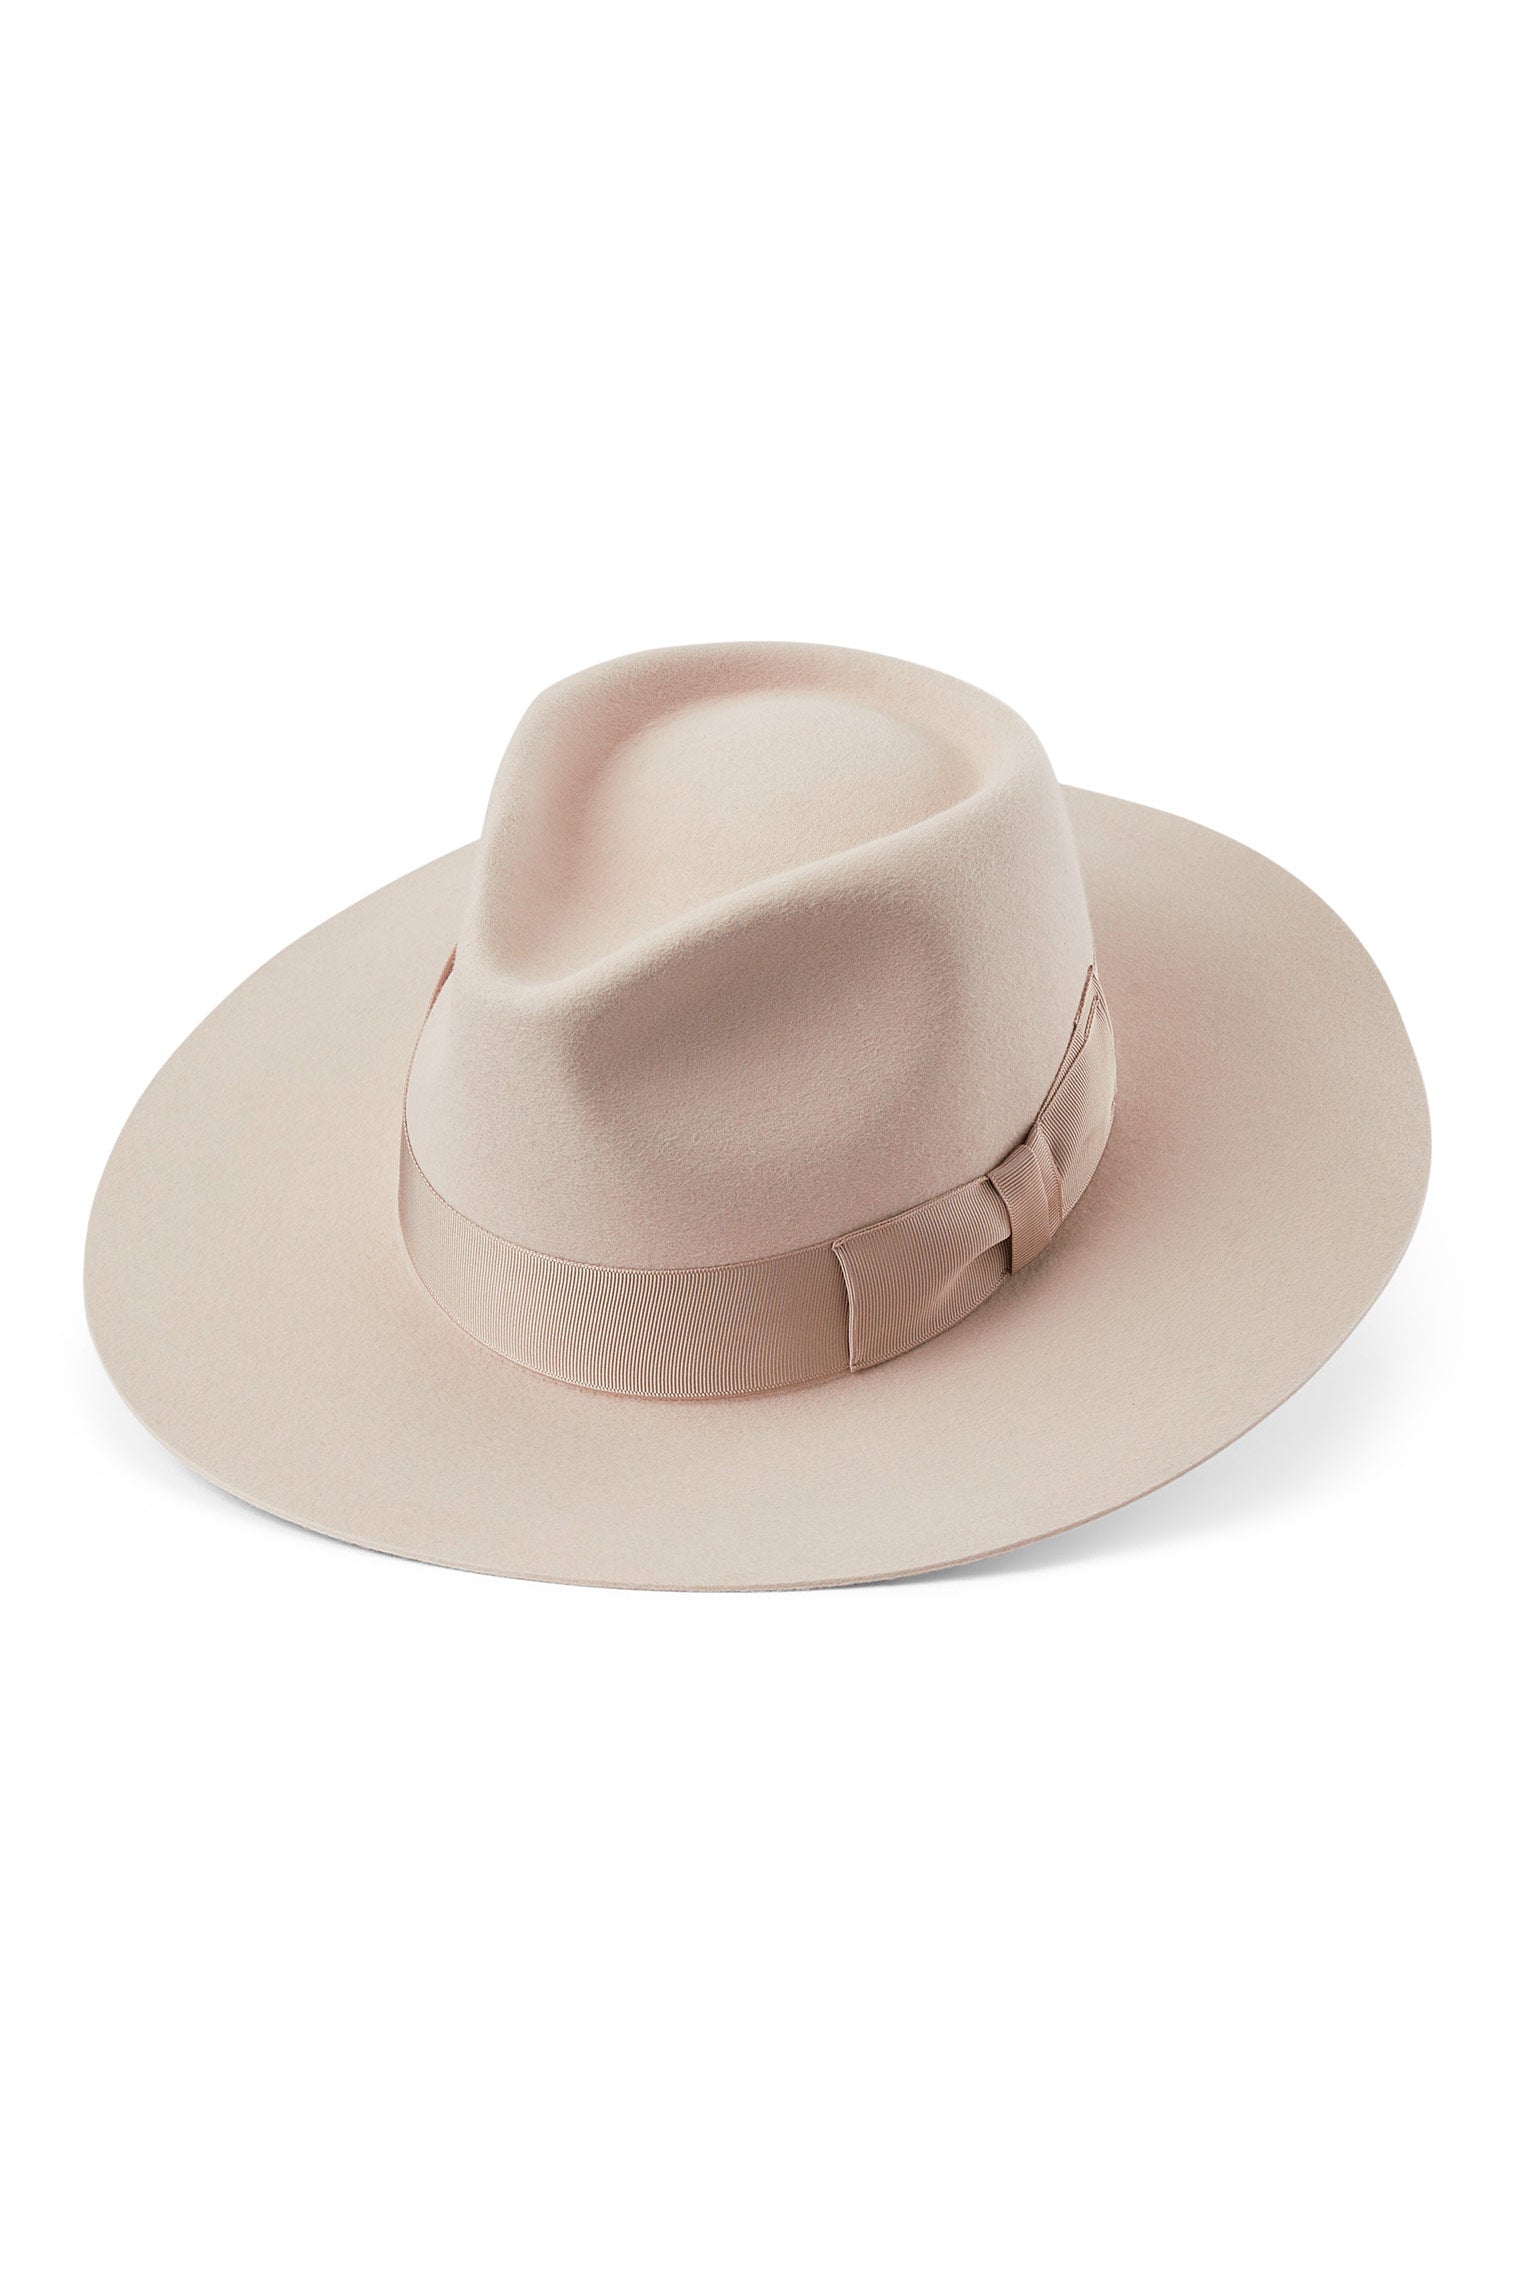 Toni Cream Flat-Brim Fedora - Women’s Hats - Lock & Co. Hatters London UK